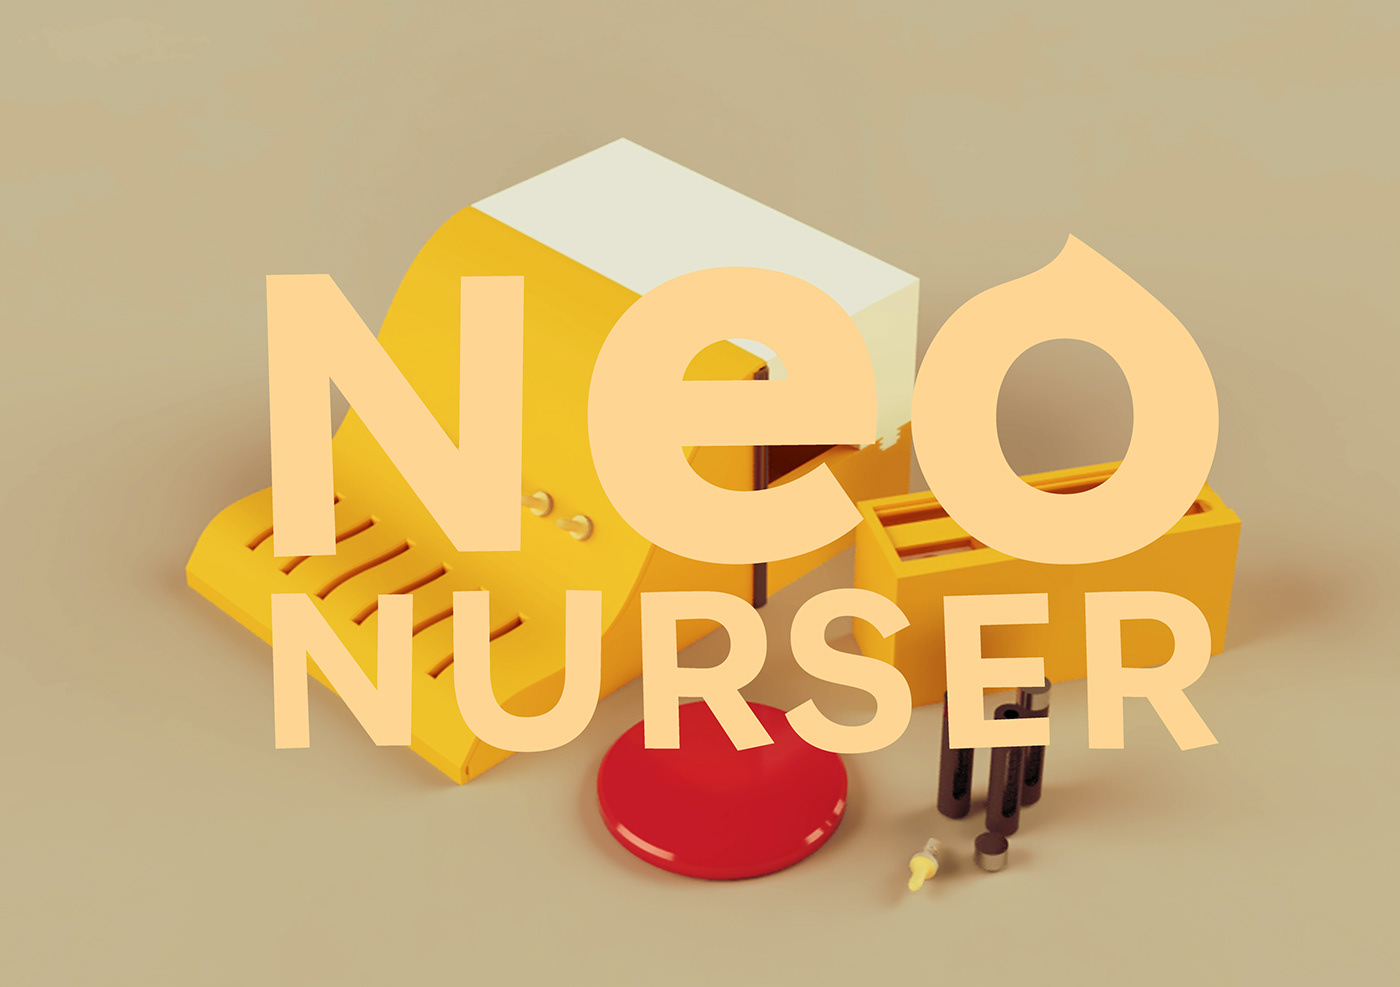 kitten feeder fusion 360 nurse 3647QCA foster carer neonatal